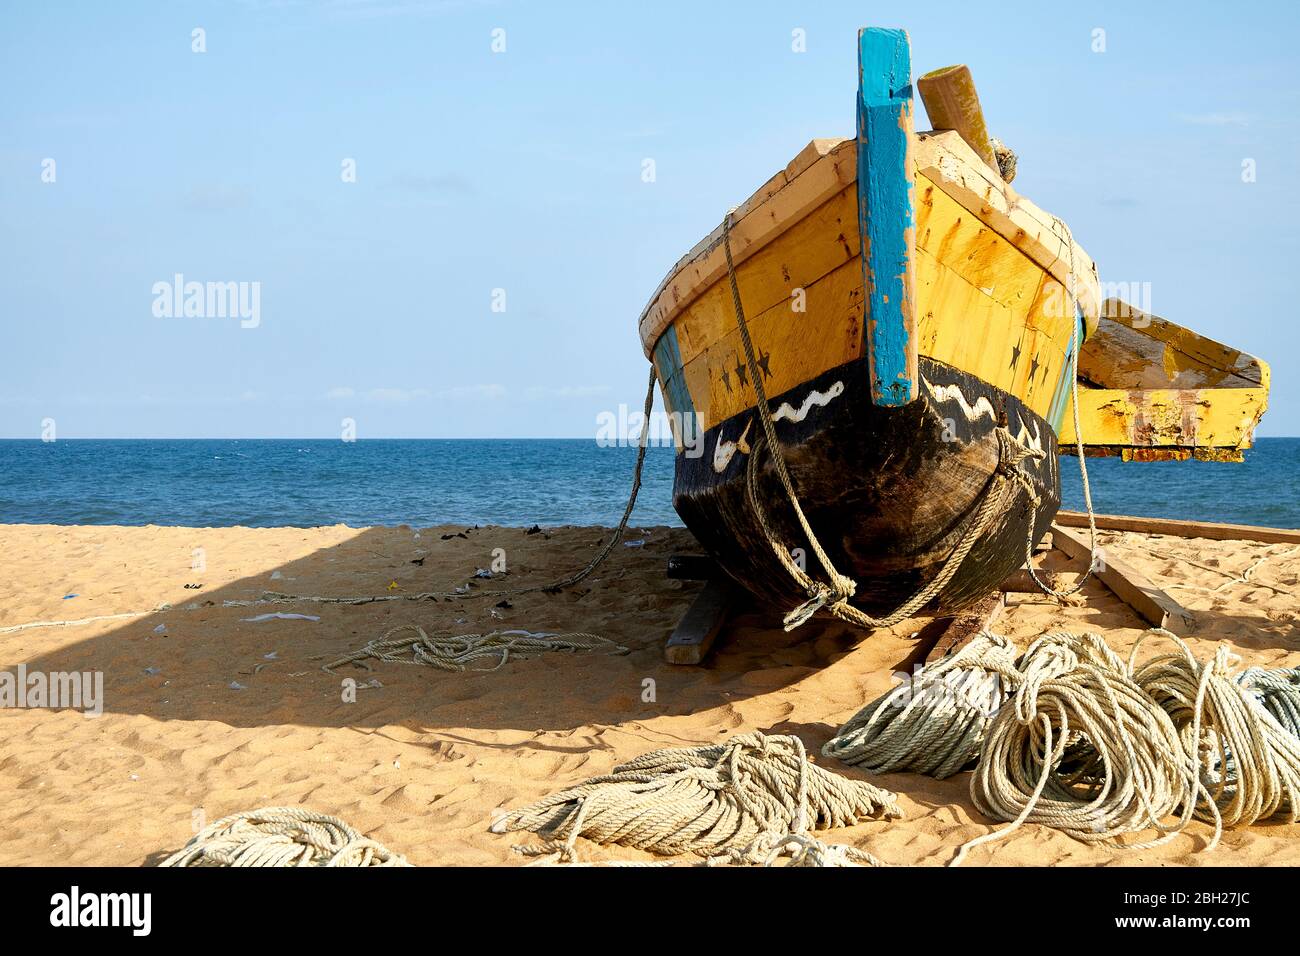 Ghana, Keta, Old fishing boat left on sandy coastal beach Stock Photo